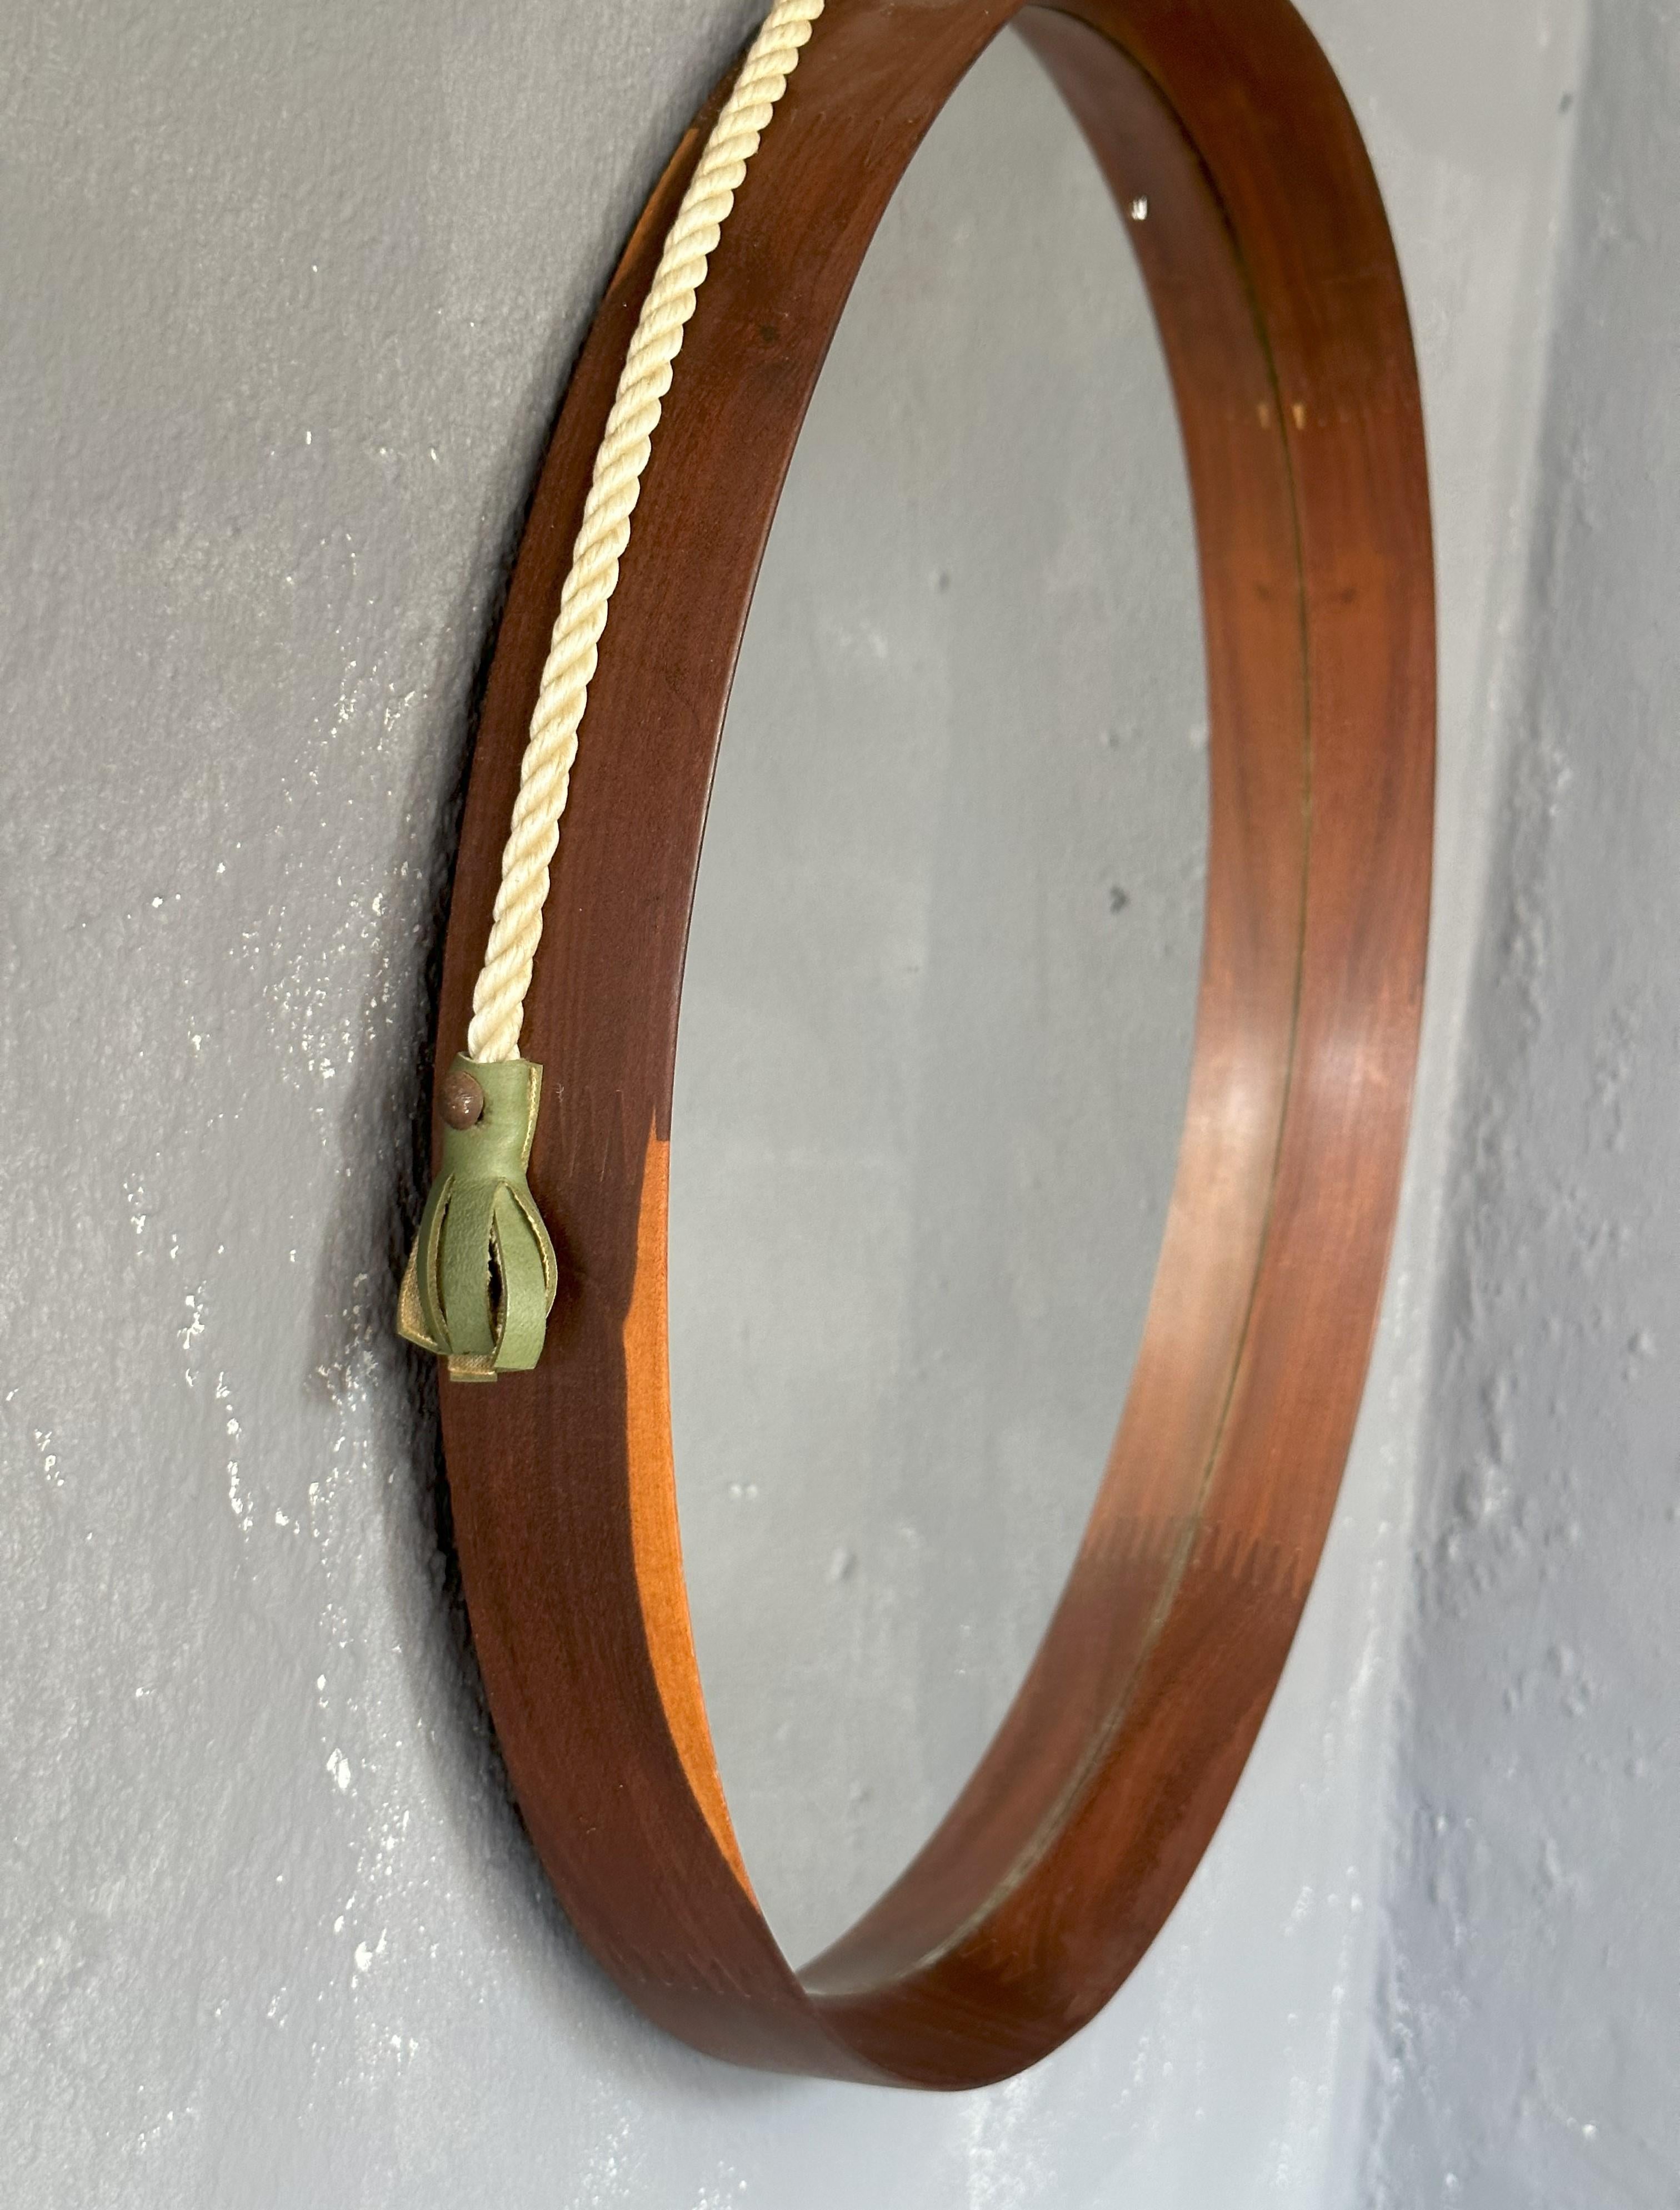 miroir rond avec corde